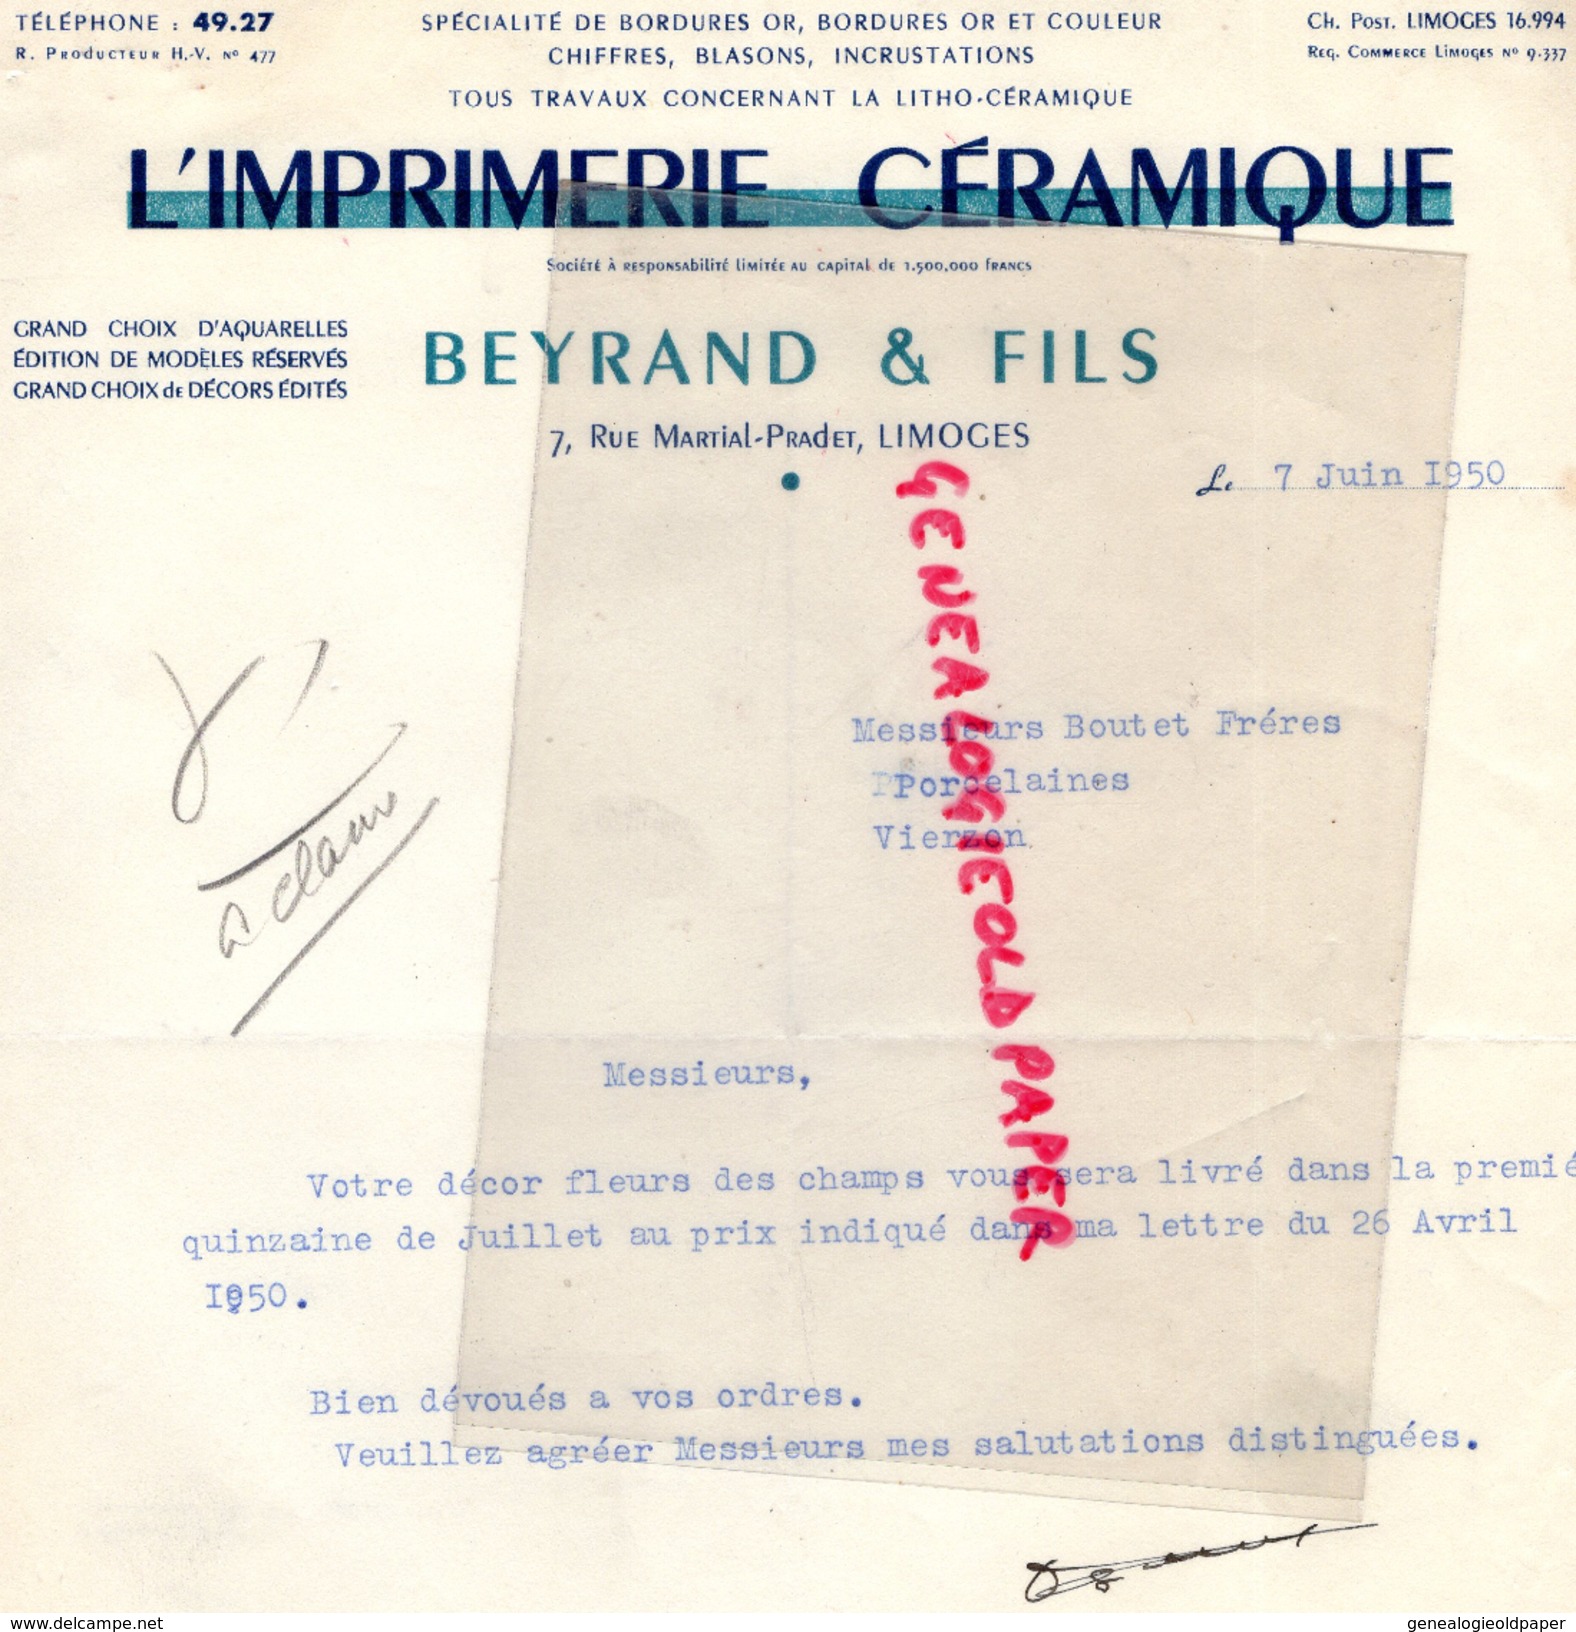 87 - LIMOGES - FACTURE L' IMPRIMERIE CERAMIQUE- BEYRAND ET FILS- 7 RUE MARTIAL PRADET -1950 - Imprimerie & Papeterie